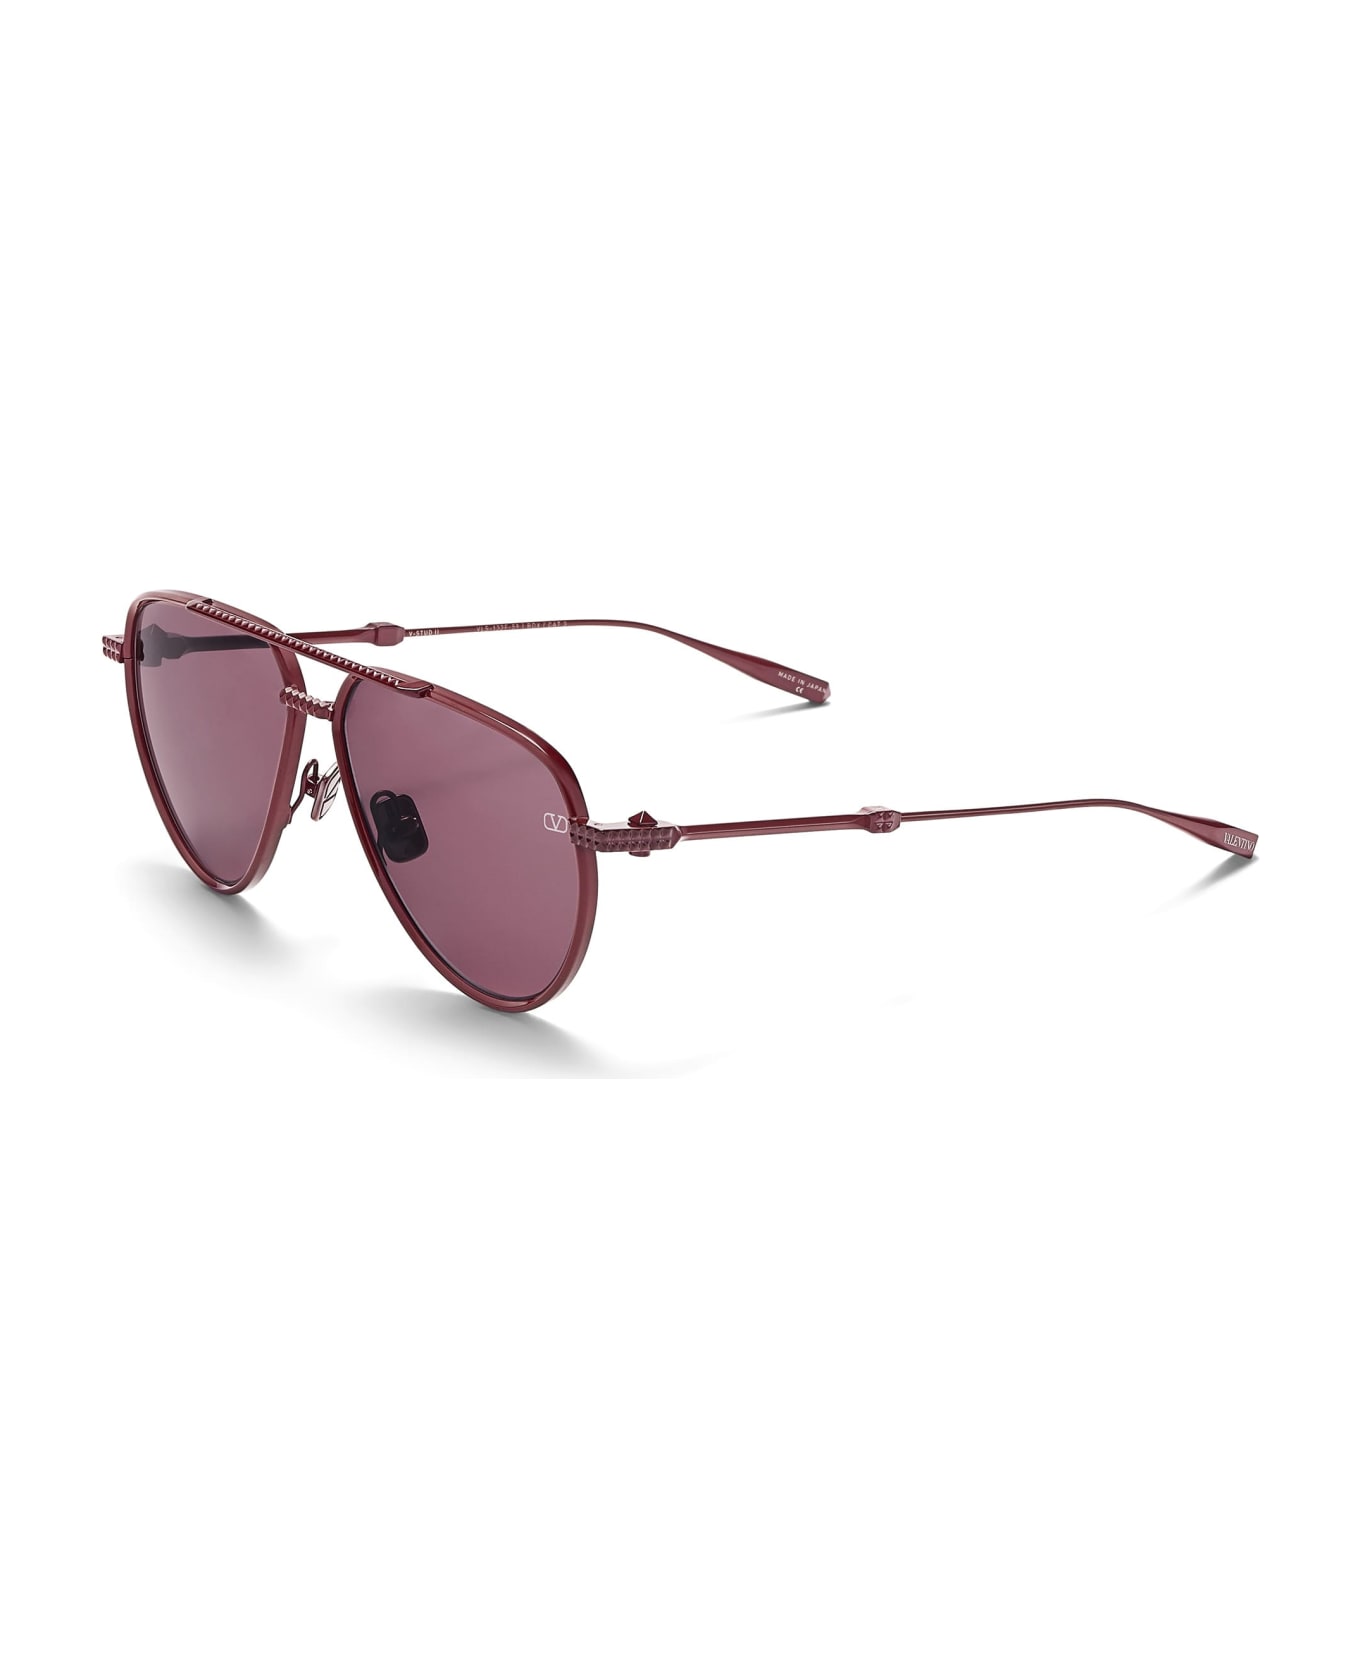 Valentino Eyewear V-stud-ii - Bordeaux Sunglasses - burgundy